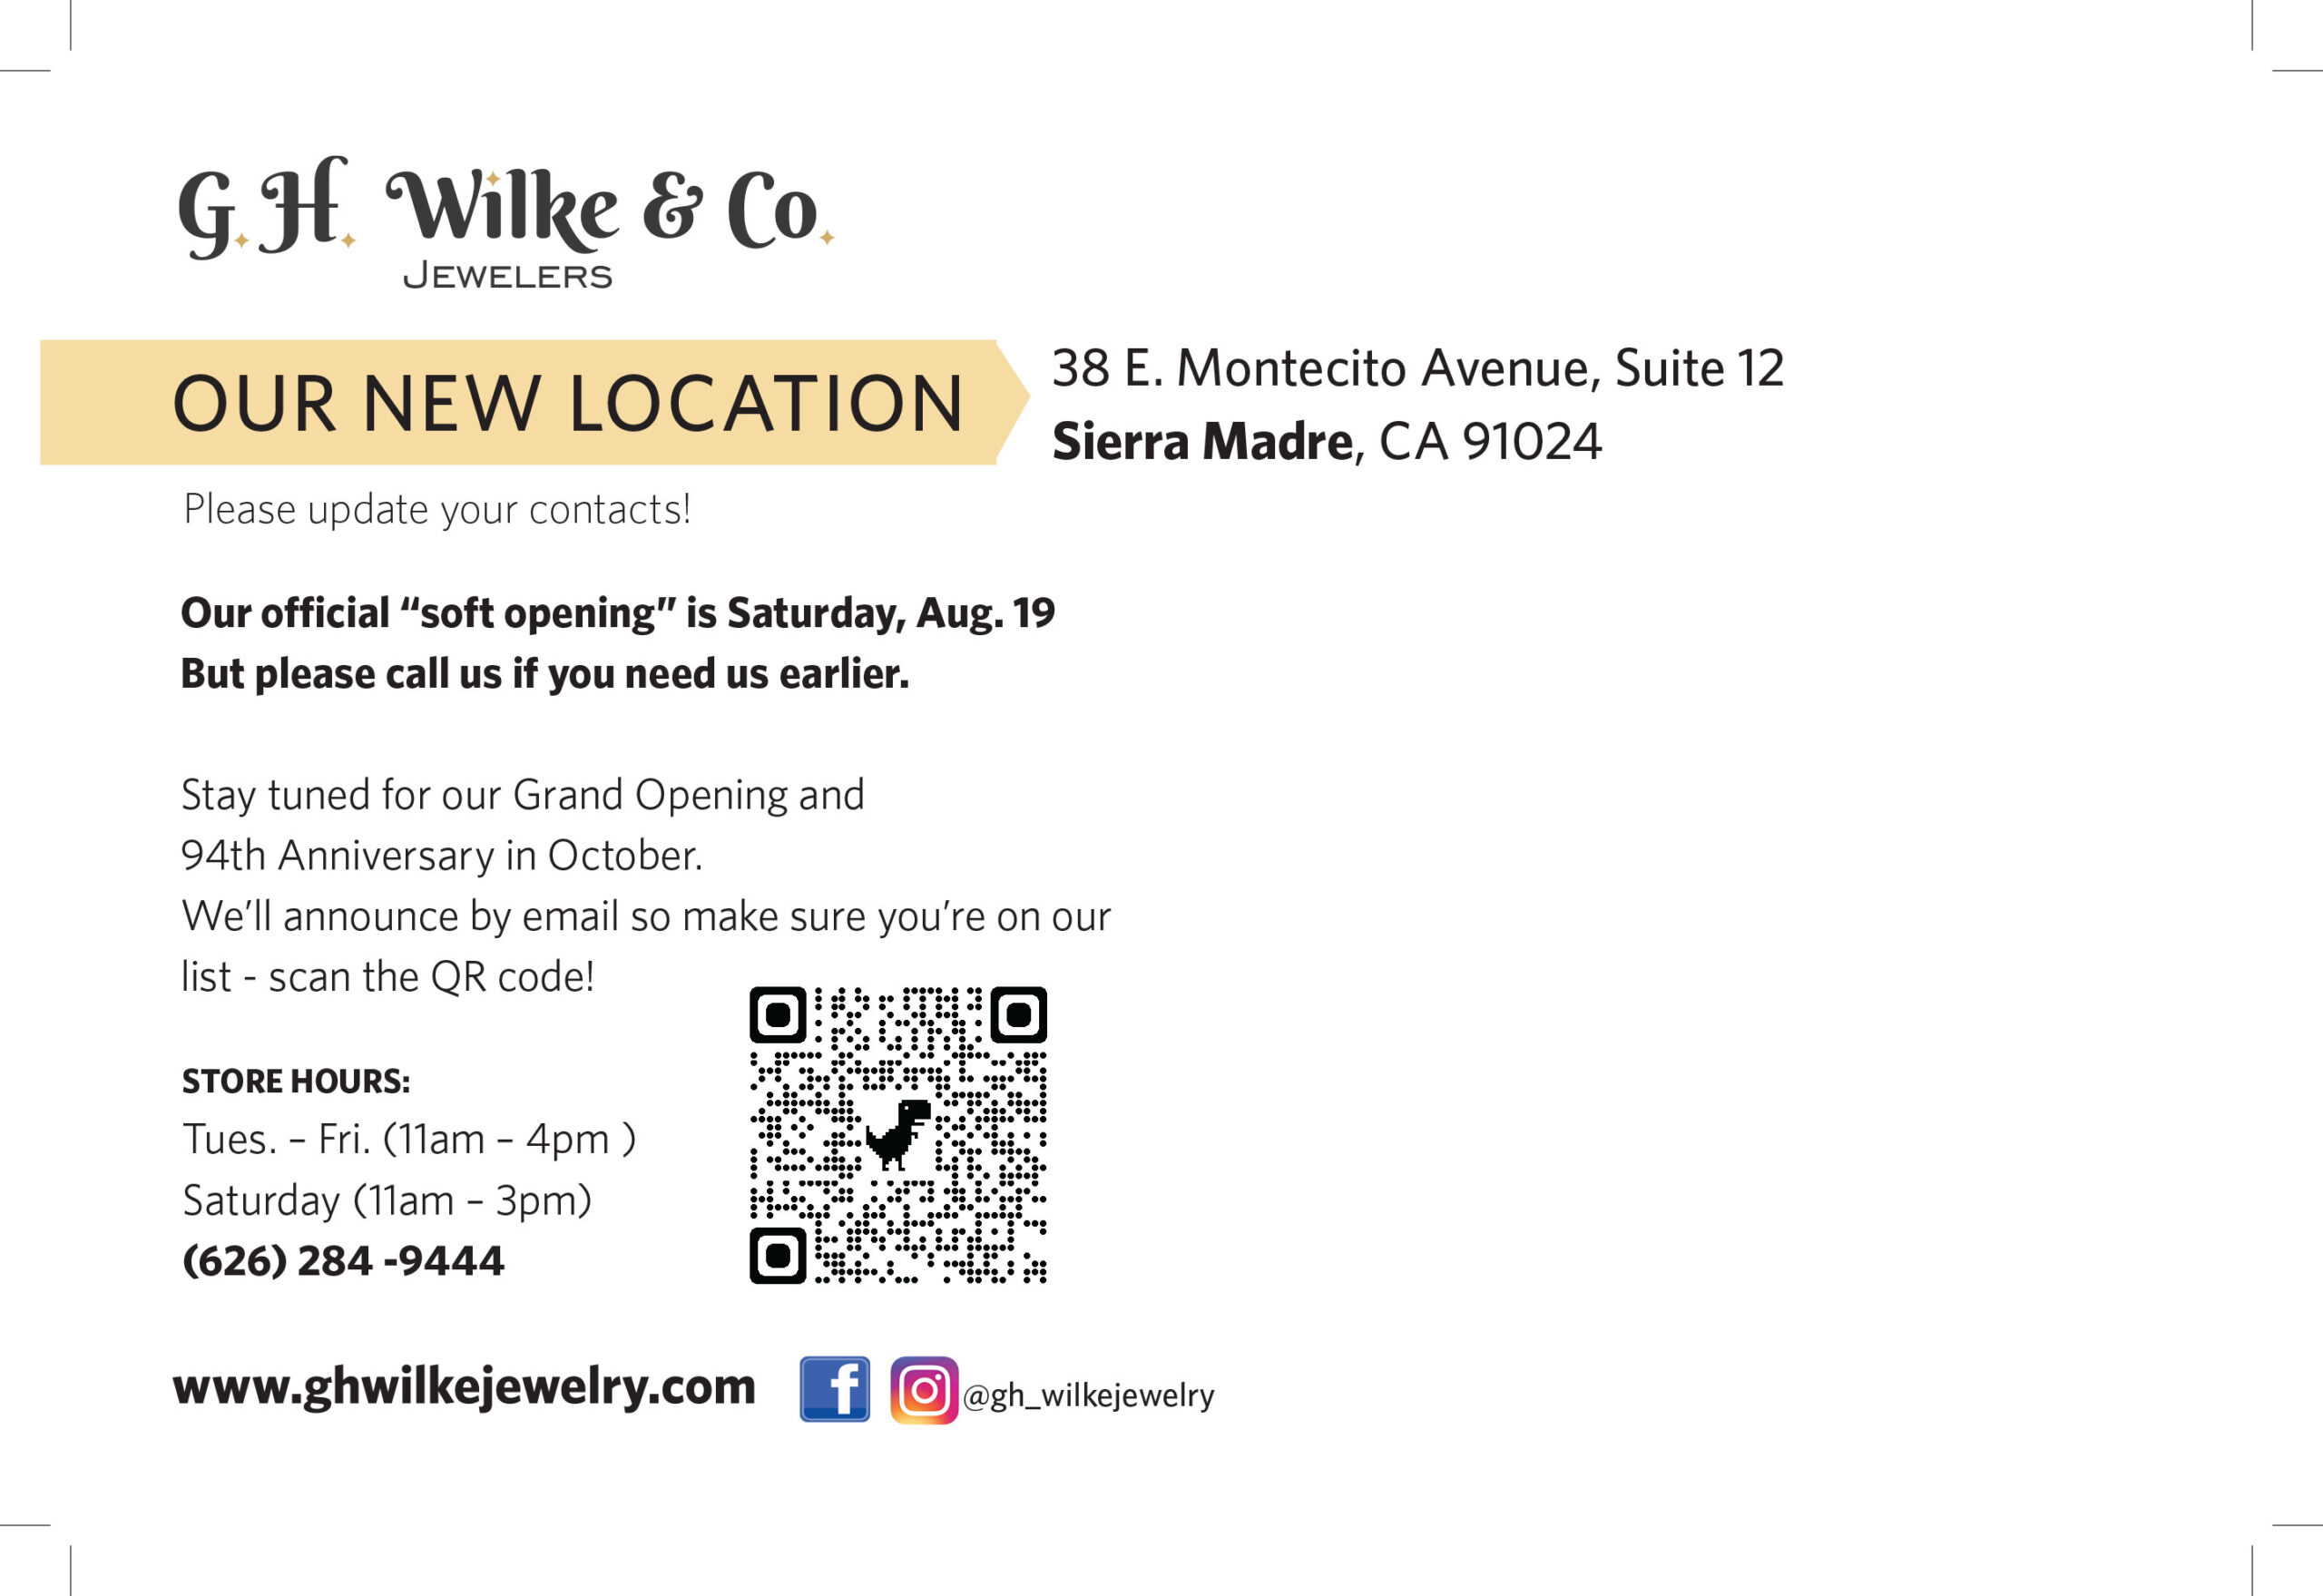 GH Wilke new location opening soon 